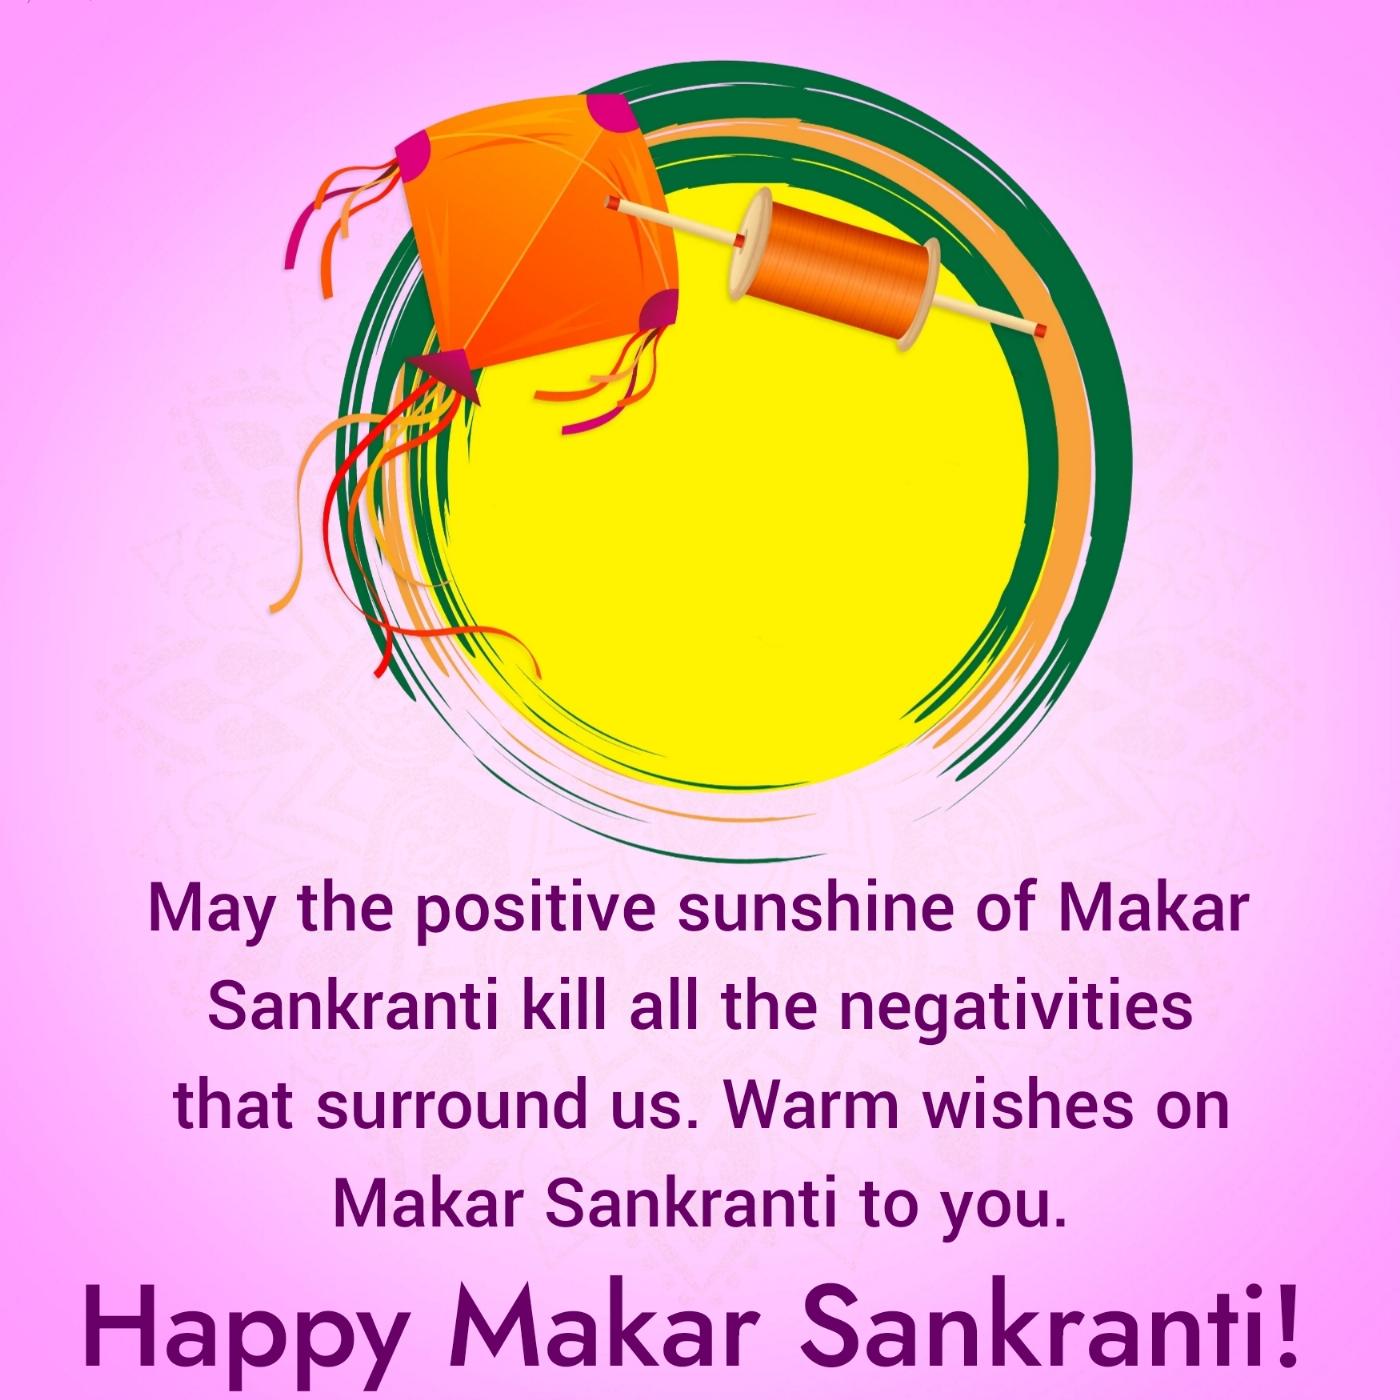 May the positive sunshine of Makar Sankranti kill all the negativities